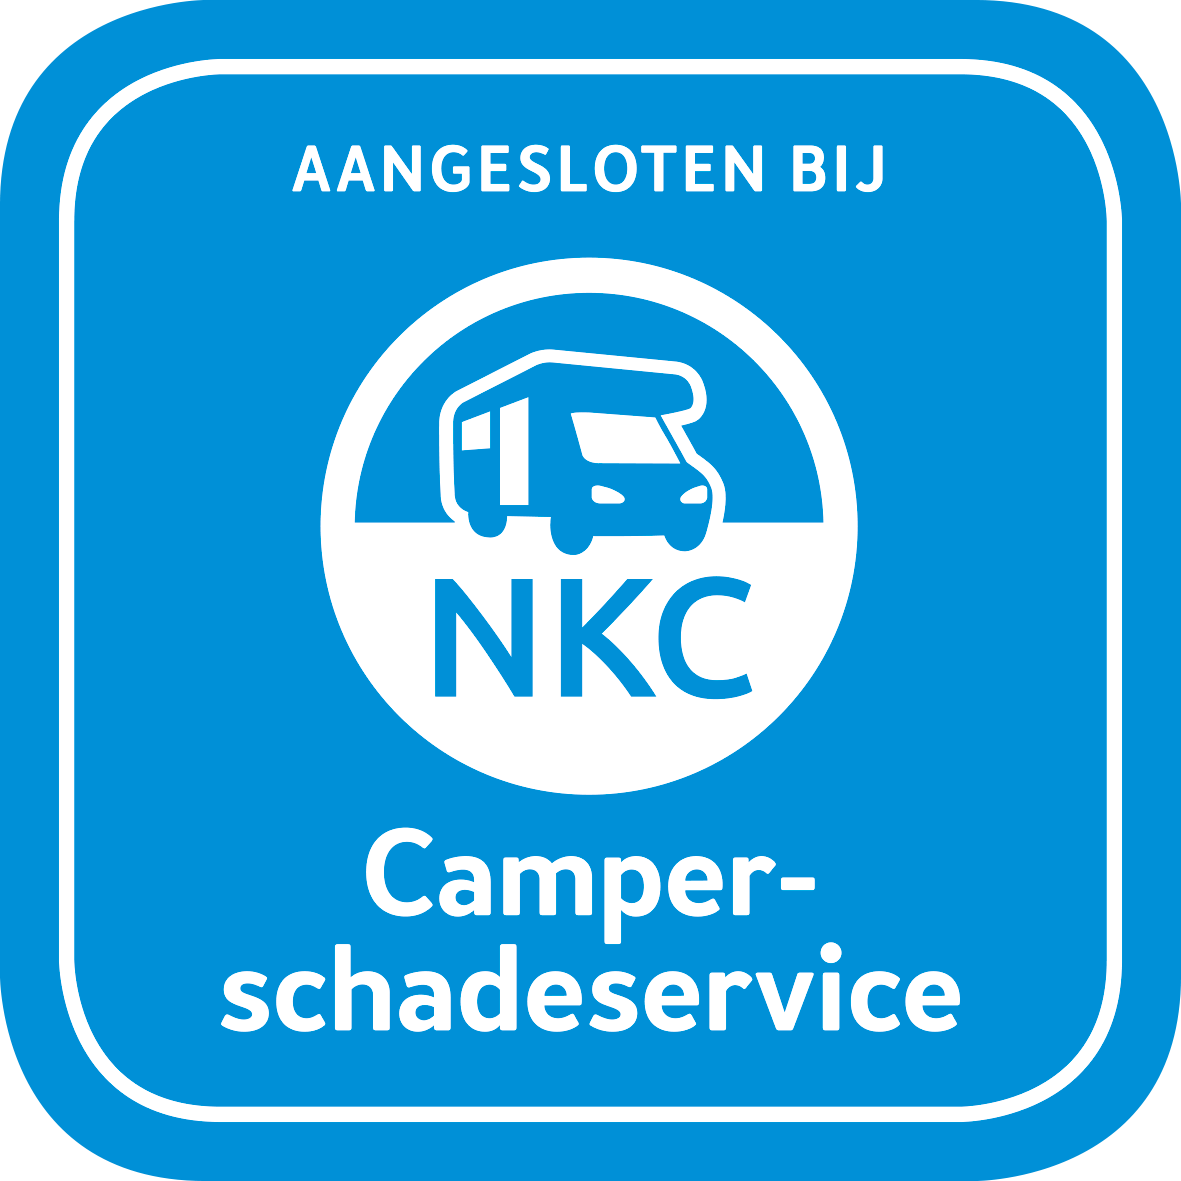 NKC Camper-schadeservice